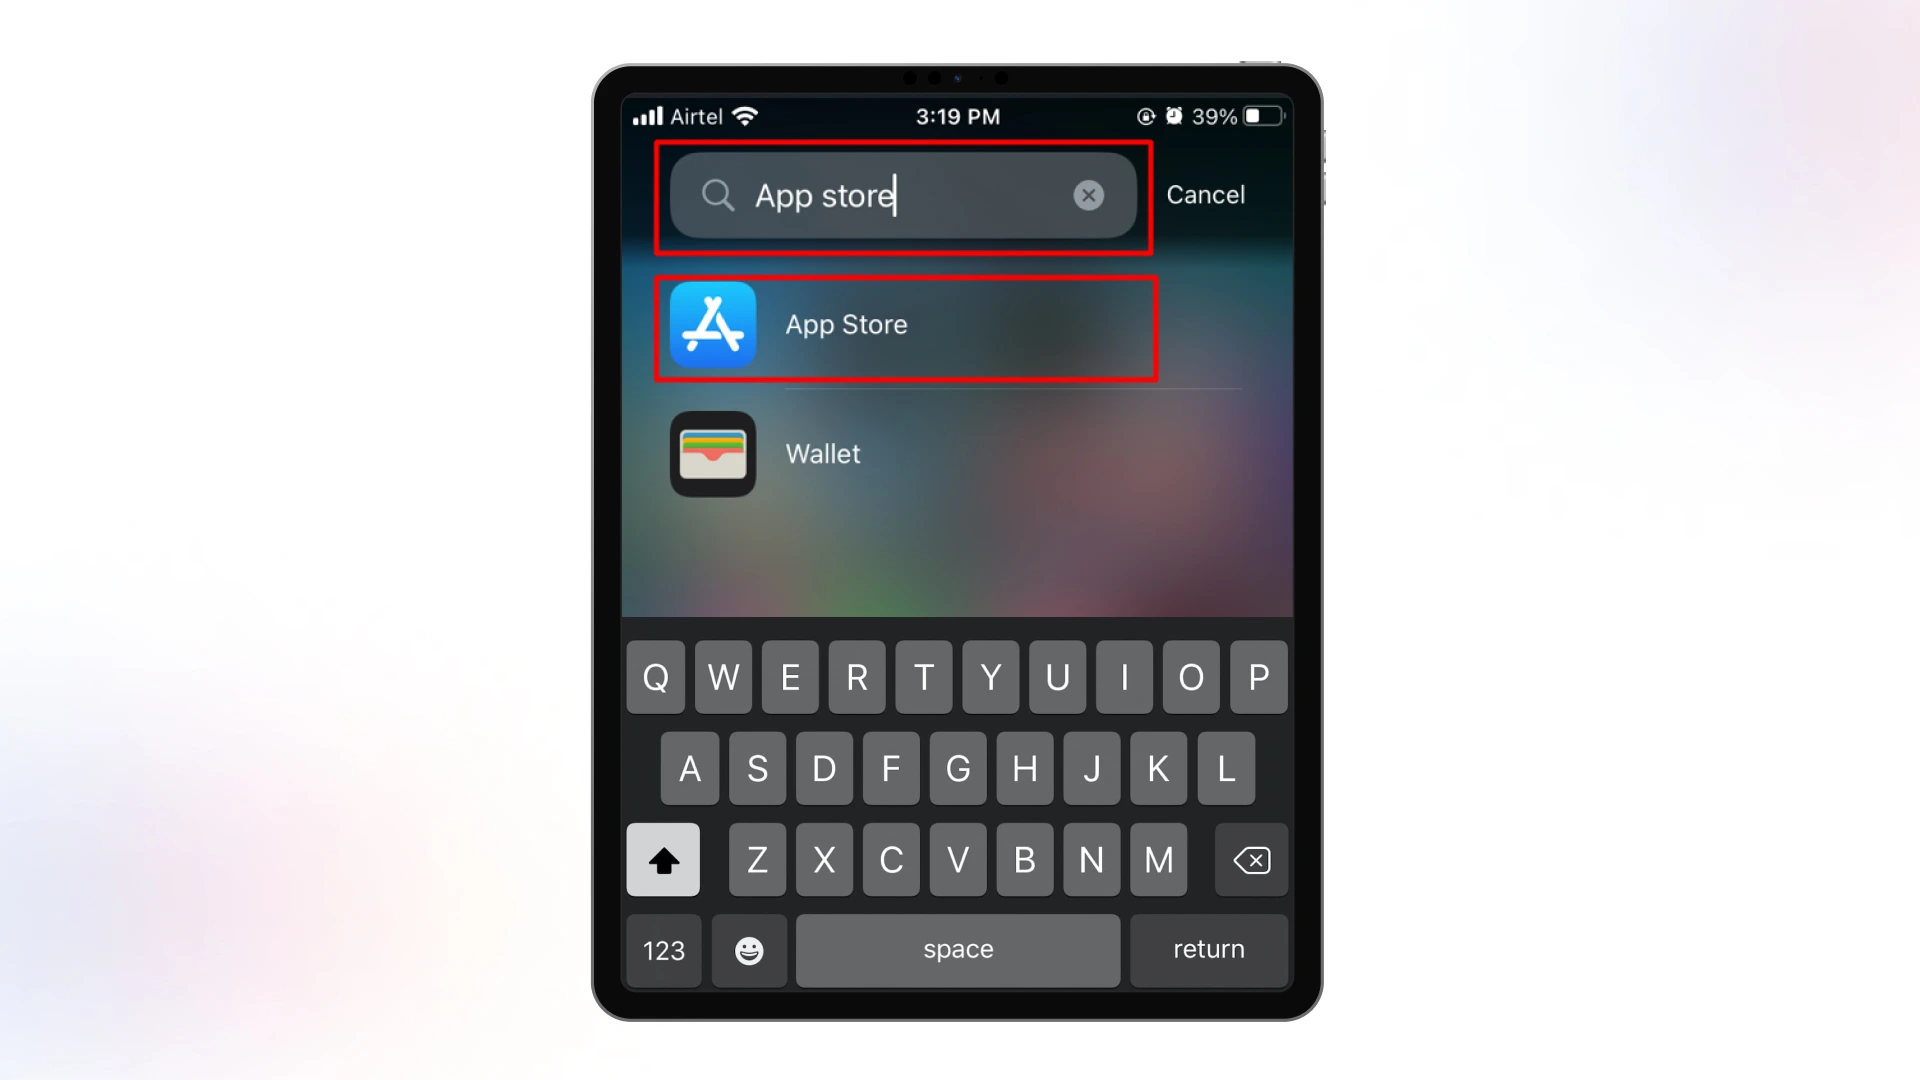 Pickcel app on Apple's App store File: representative image of app store screen